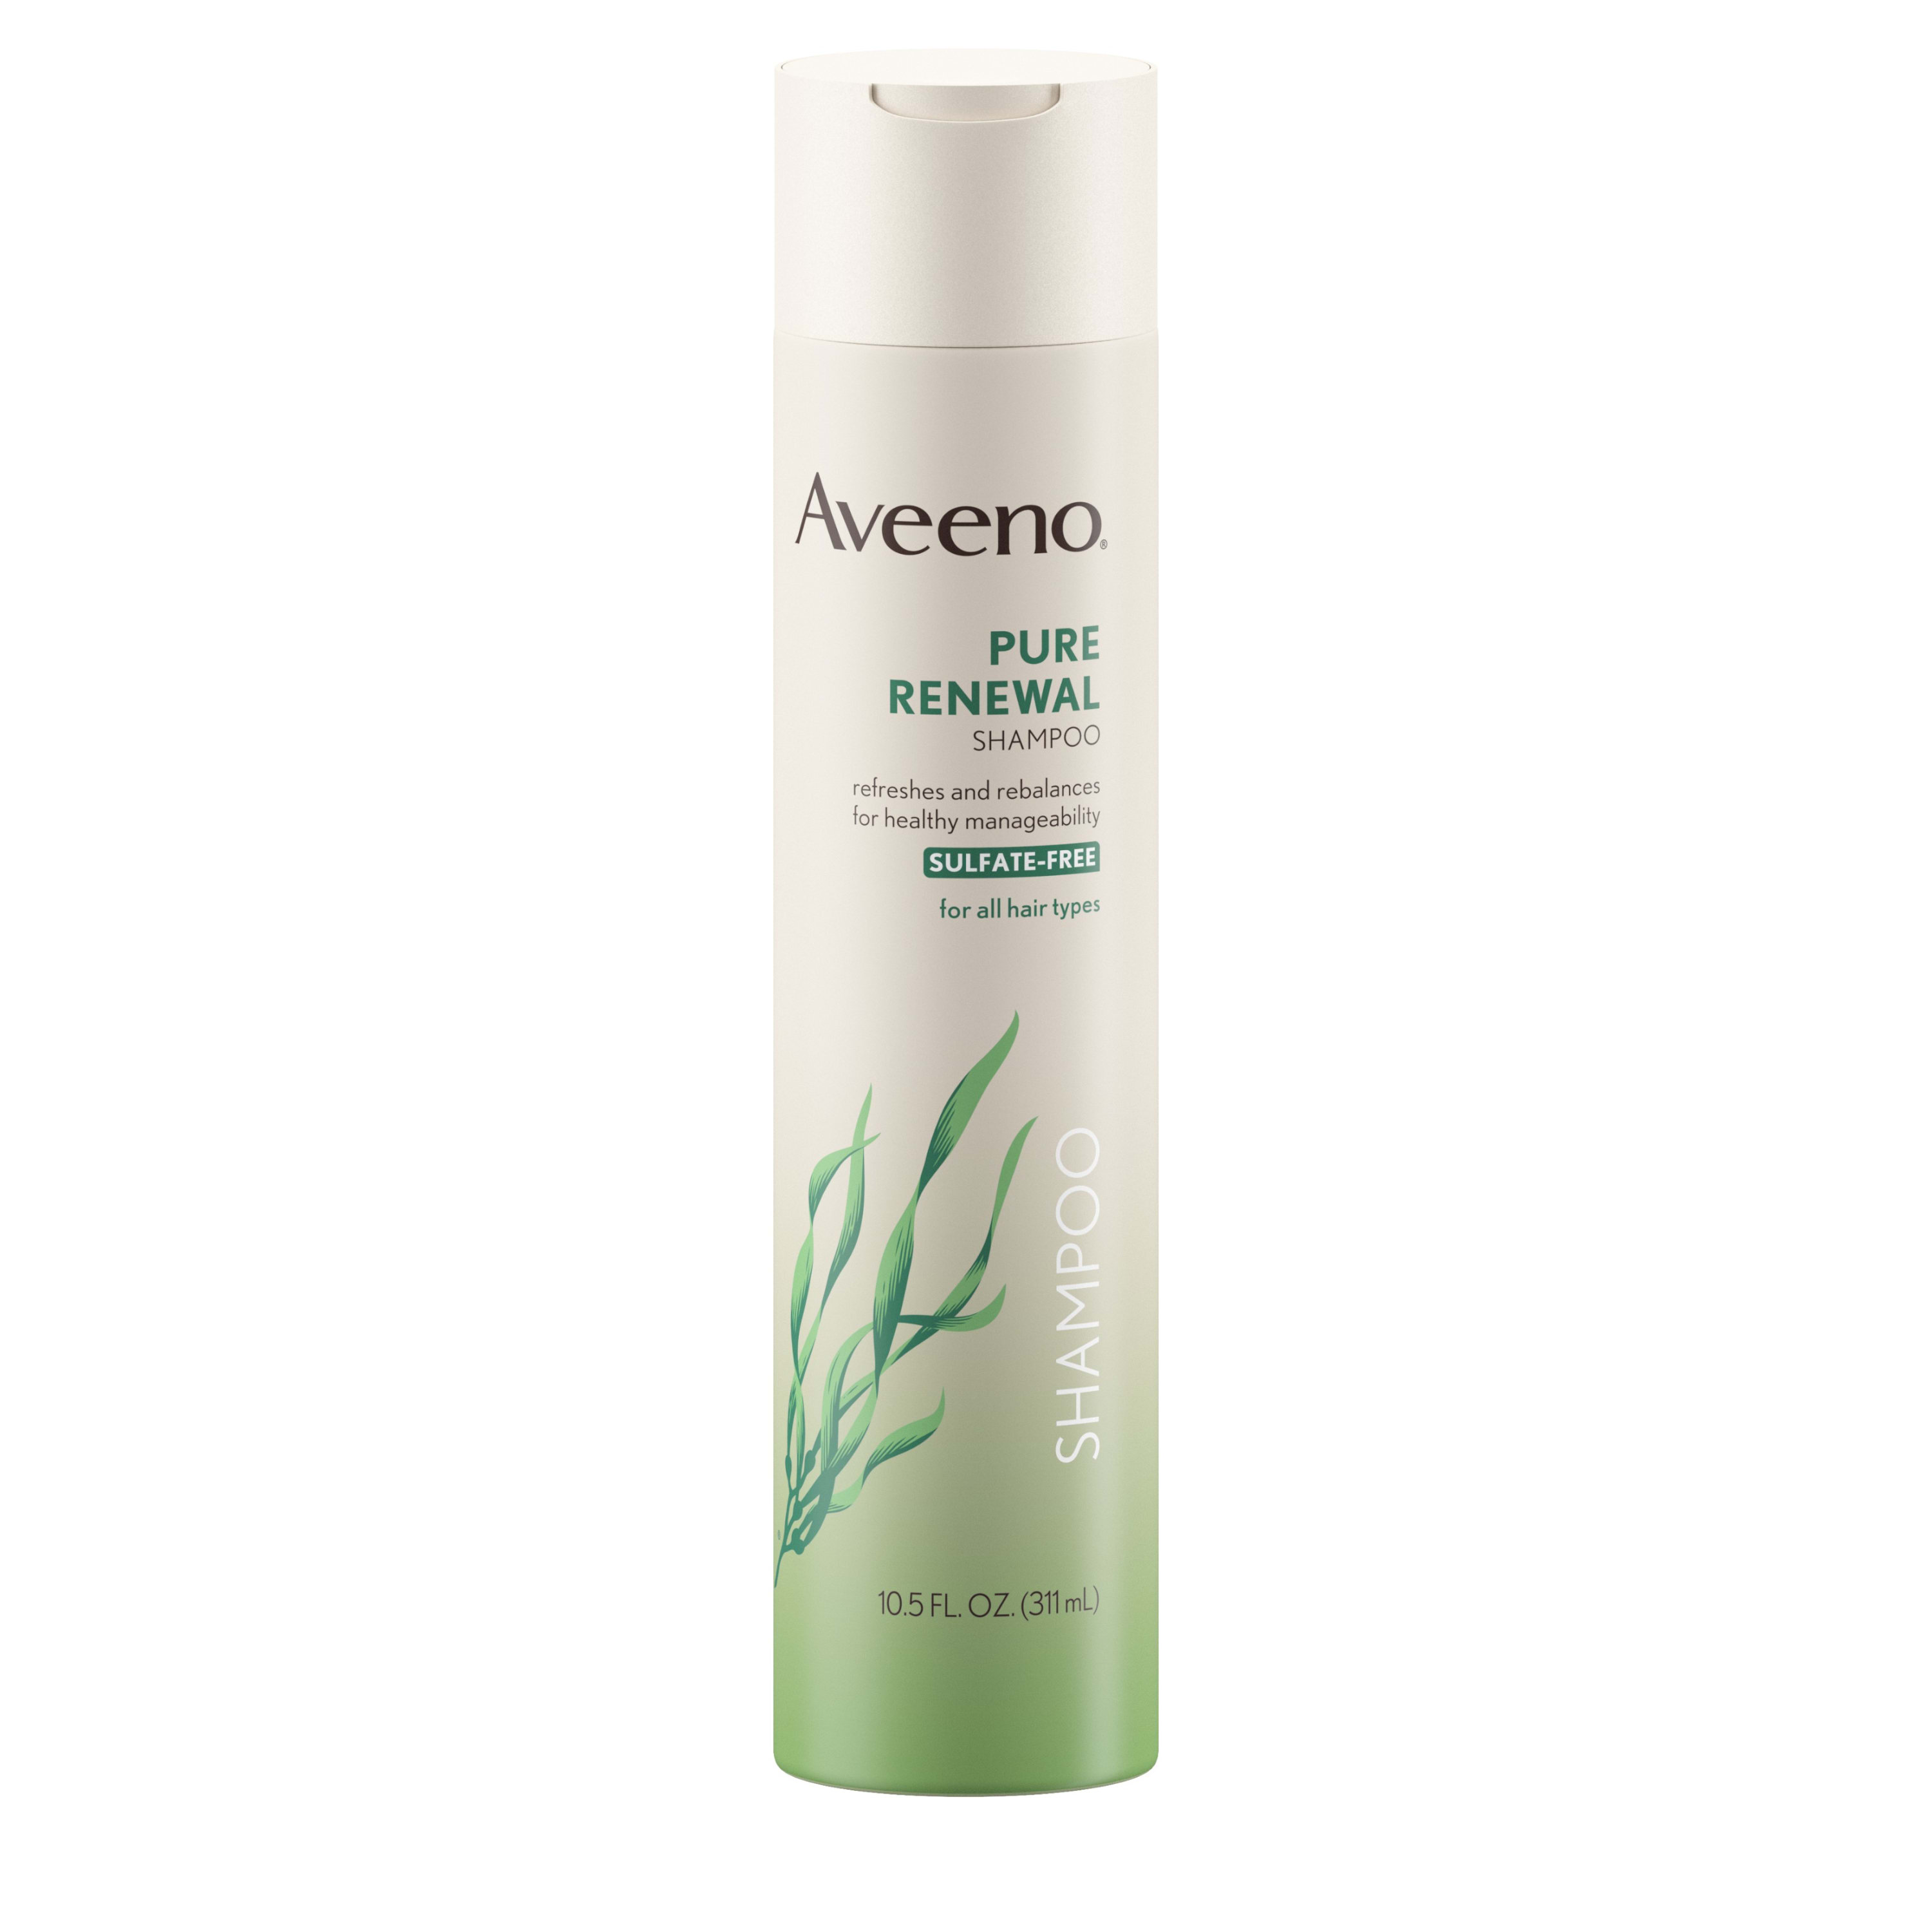 Aveeno Active Naturals Pure Renewal Moisturizing Daily Shampoo with Seaweed Extract, 10.5 fl oz - image 2 of 9